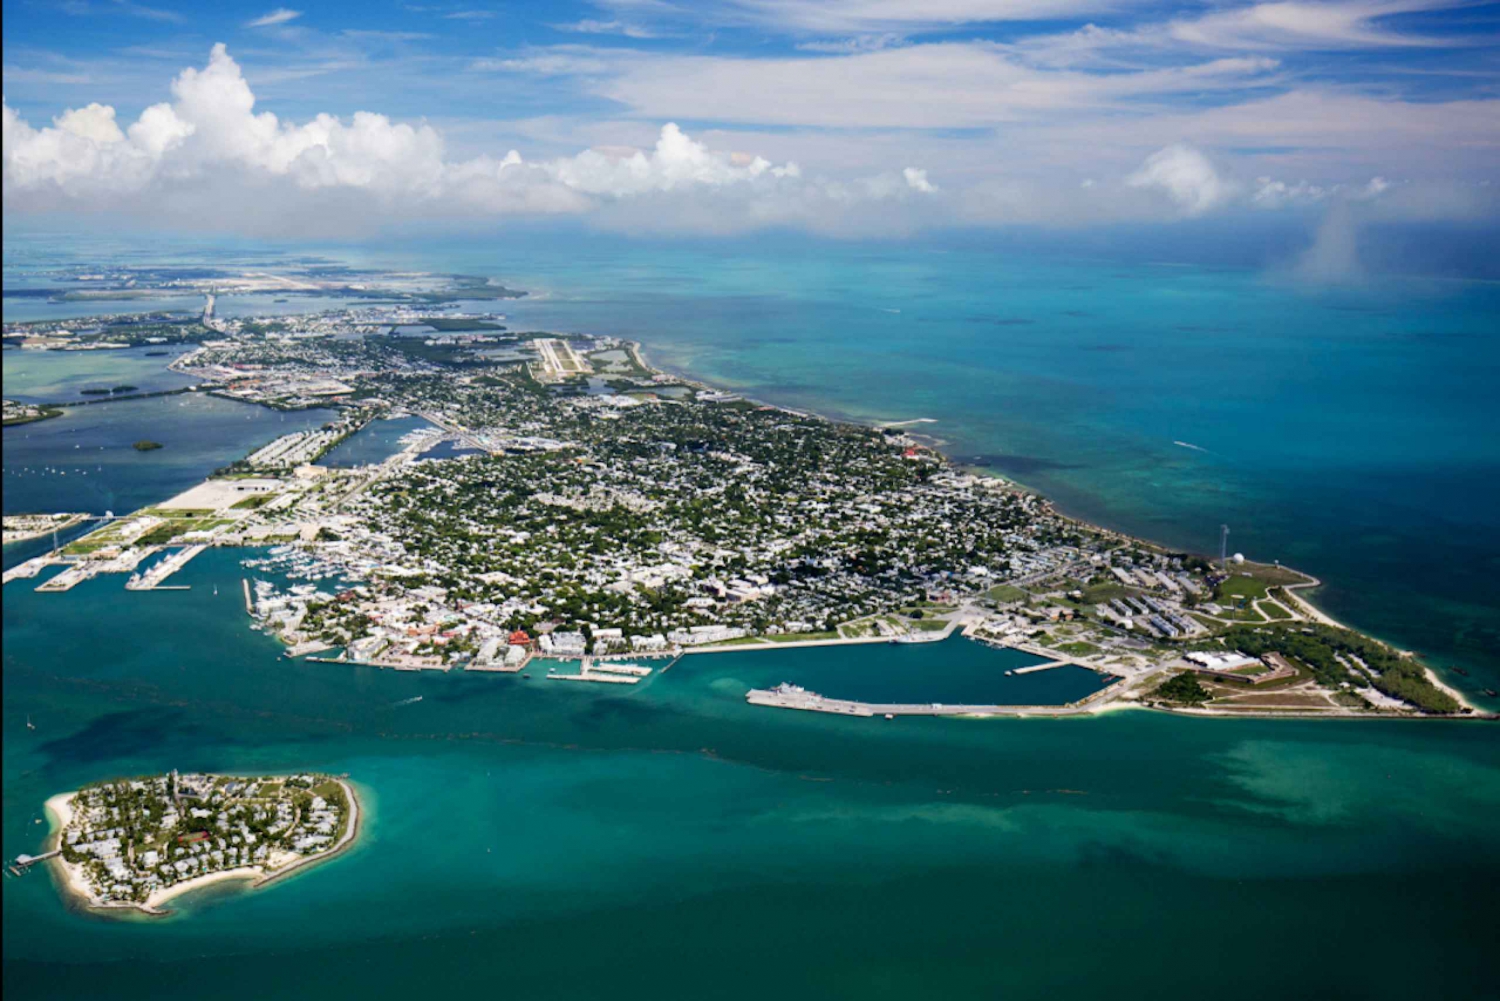 Round-trip Transportation to Key West from Miami